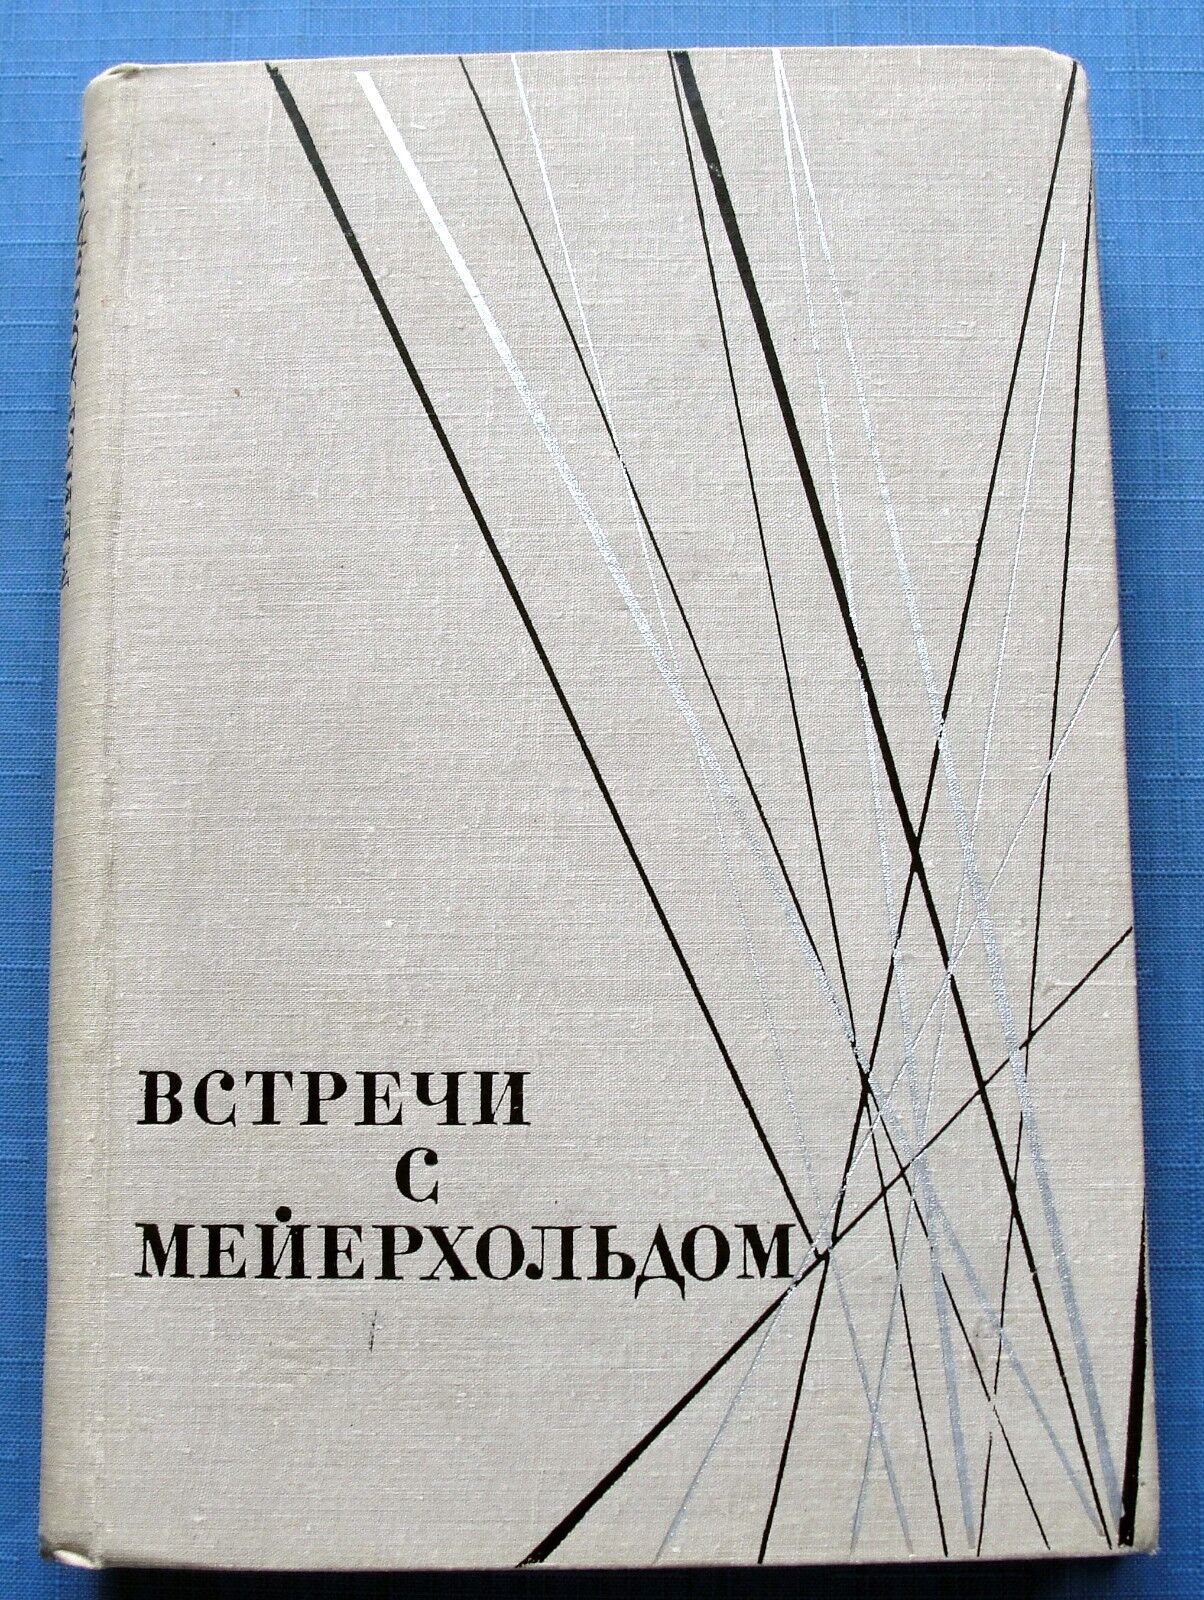 1967 Meetings with Meyerhold Soviet Theater Avant-garde movie Art Russian book